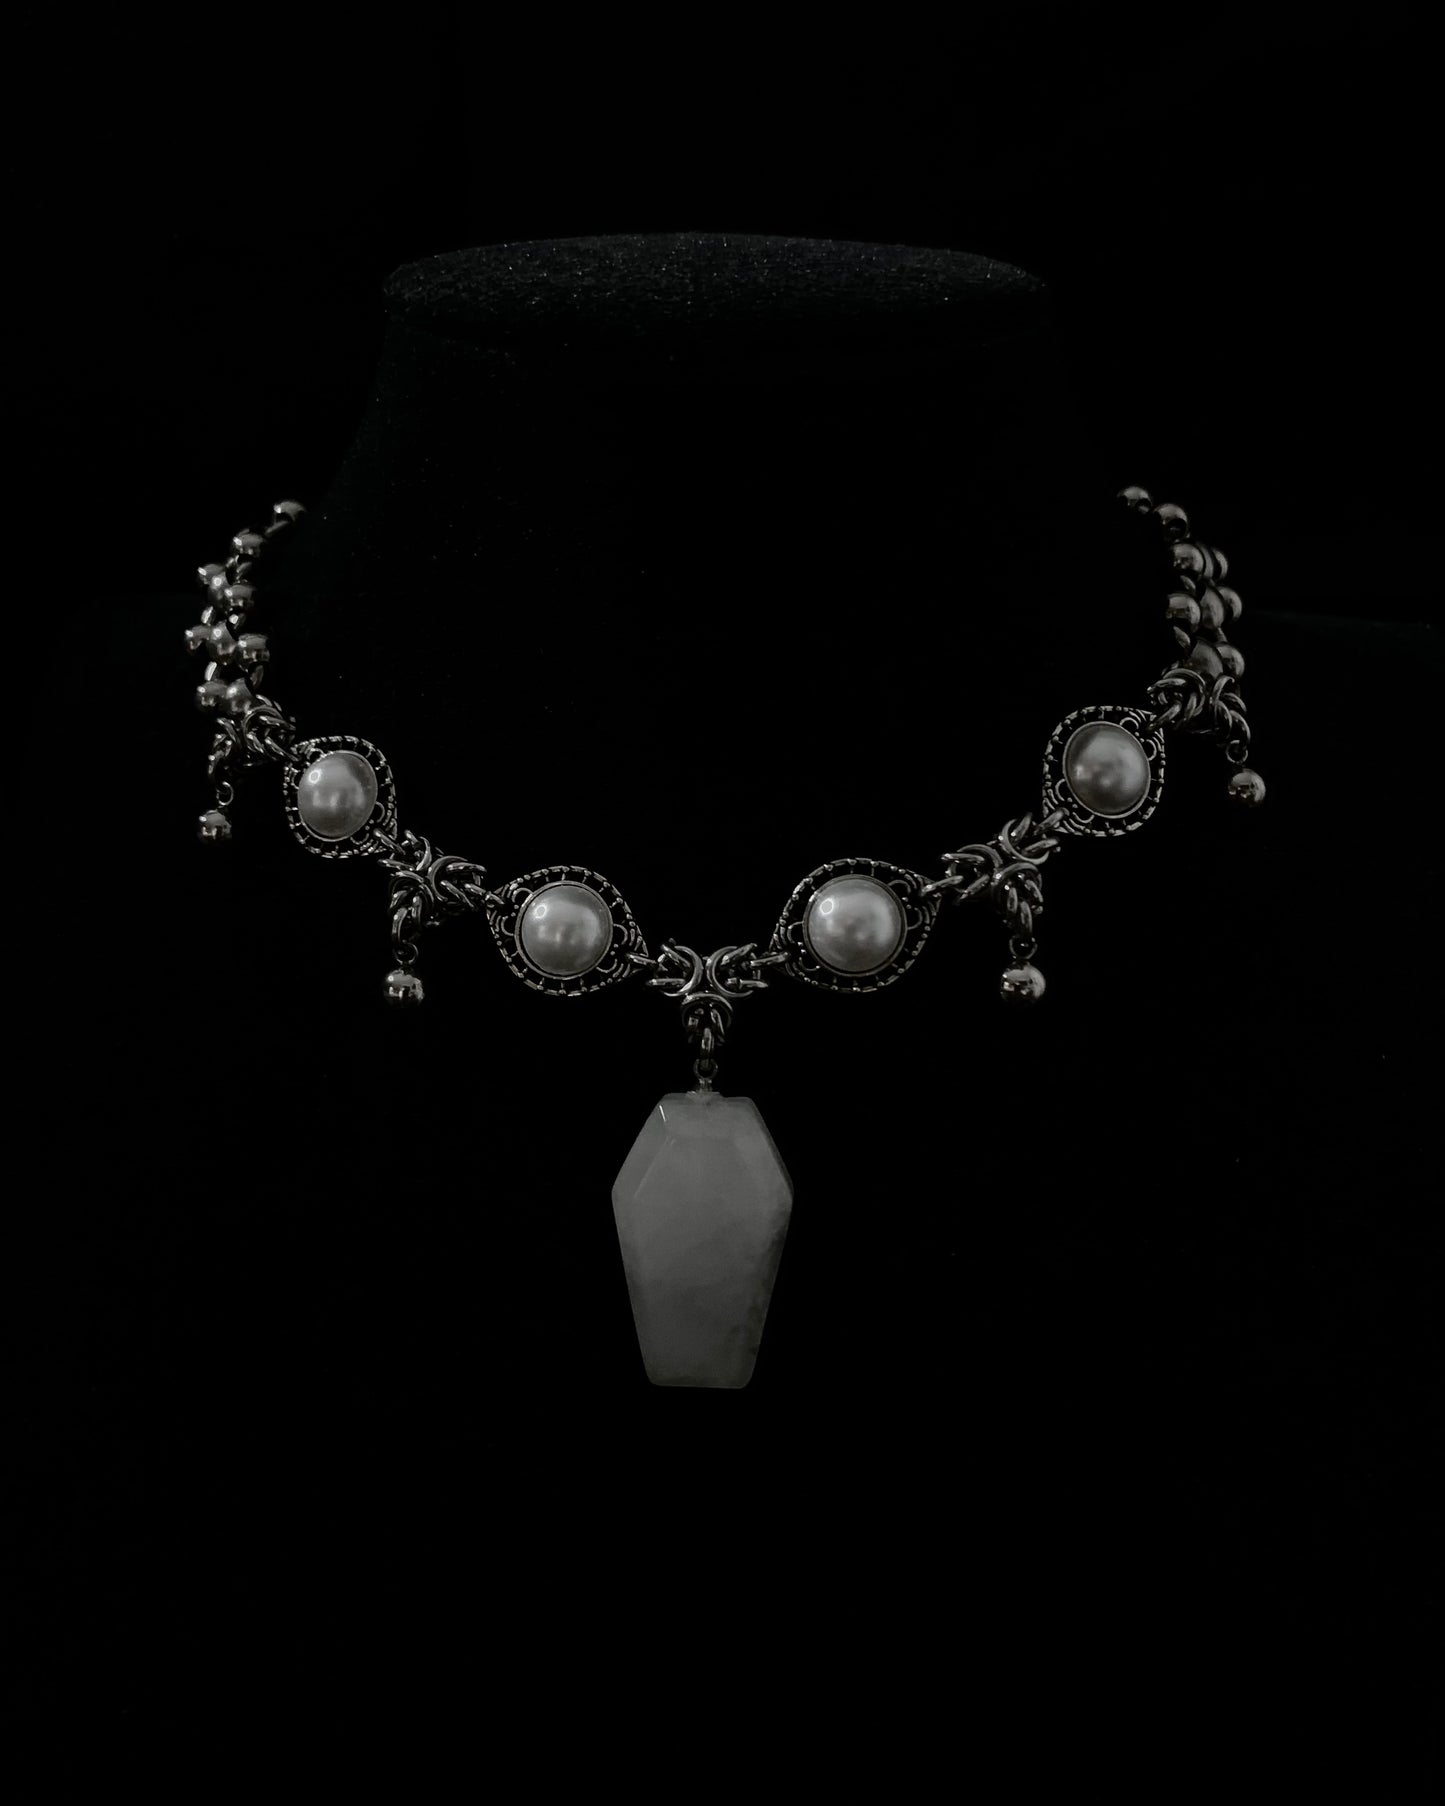 Thanatos necklace